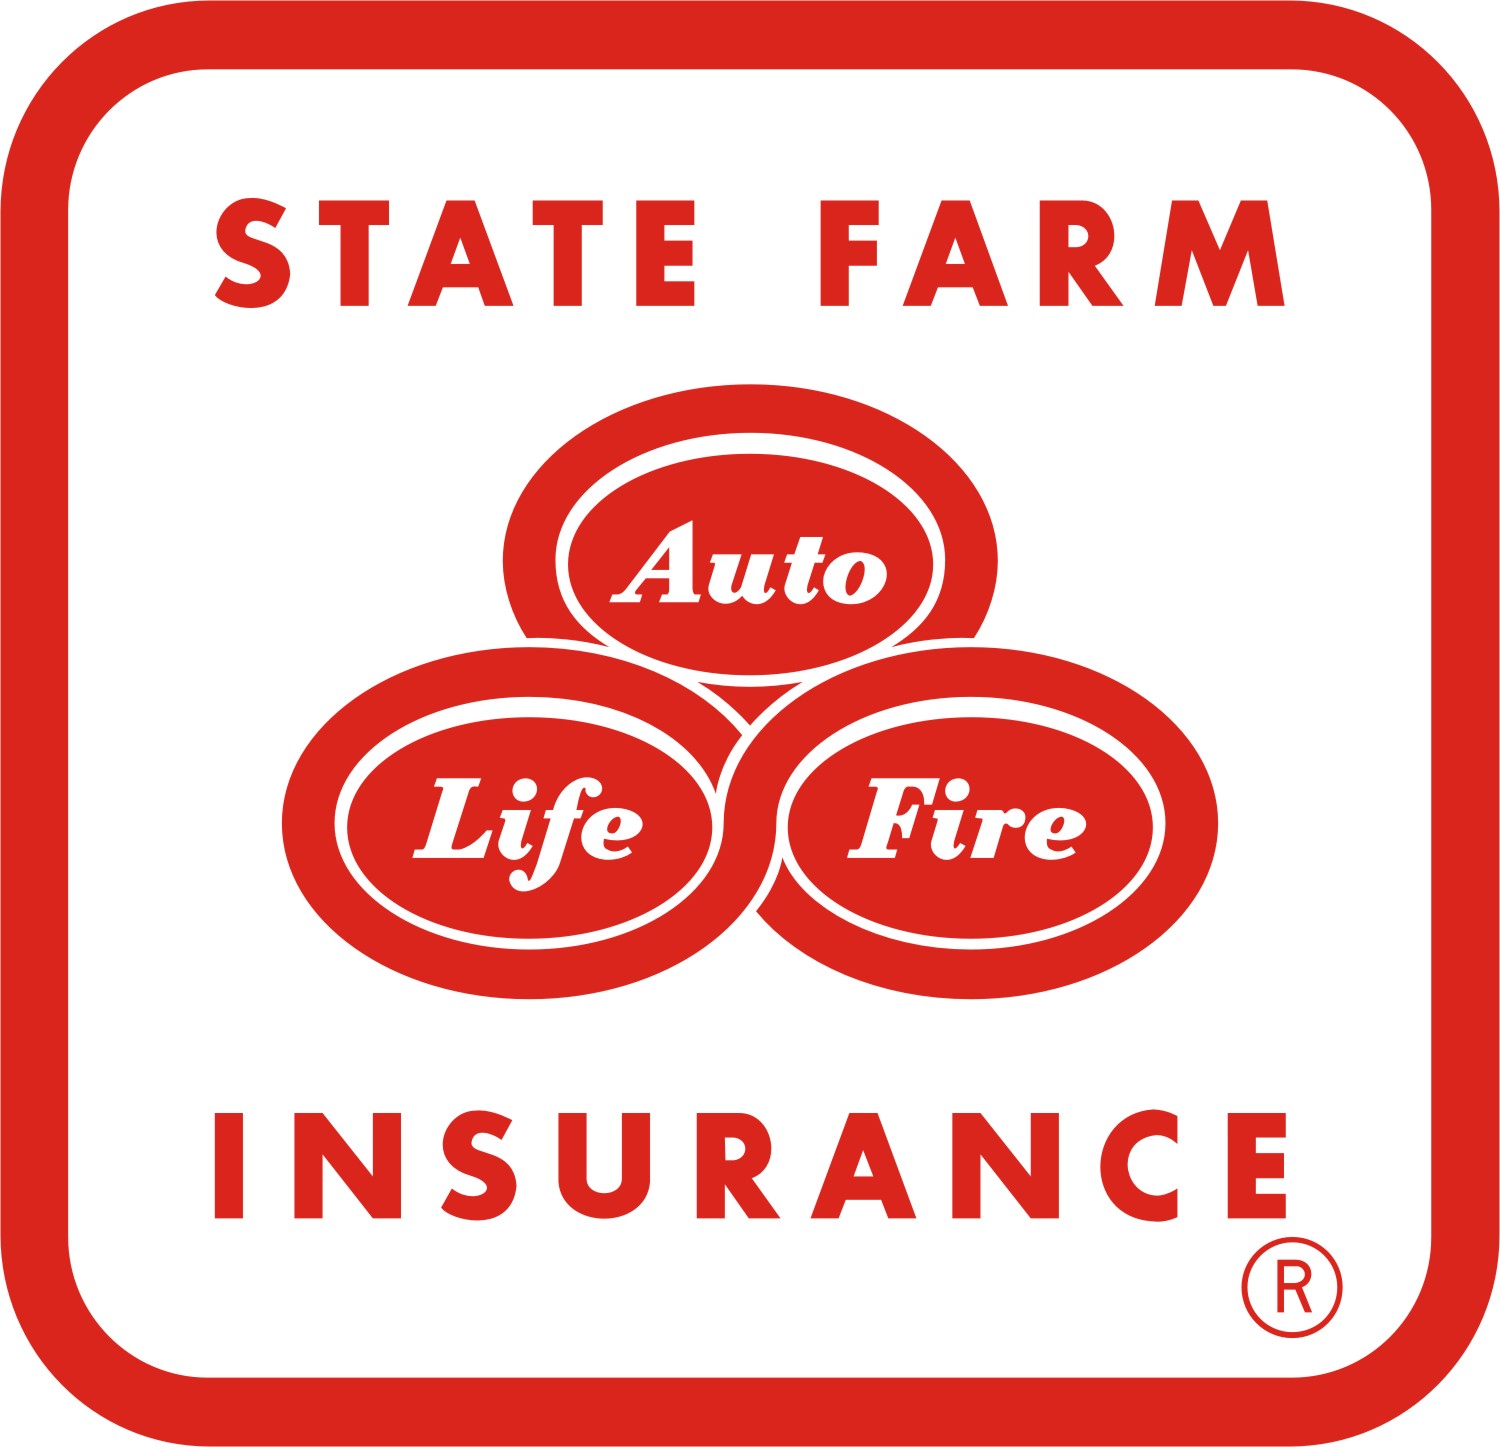 State Farm Insurance, Bloomington IL.